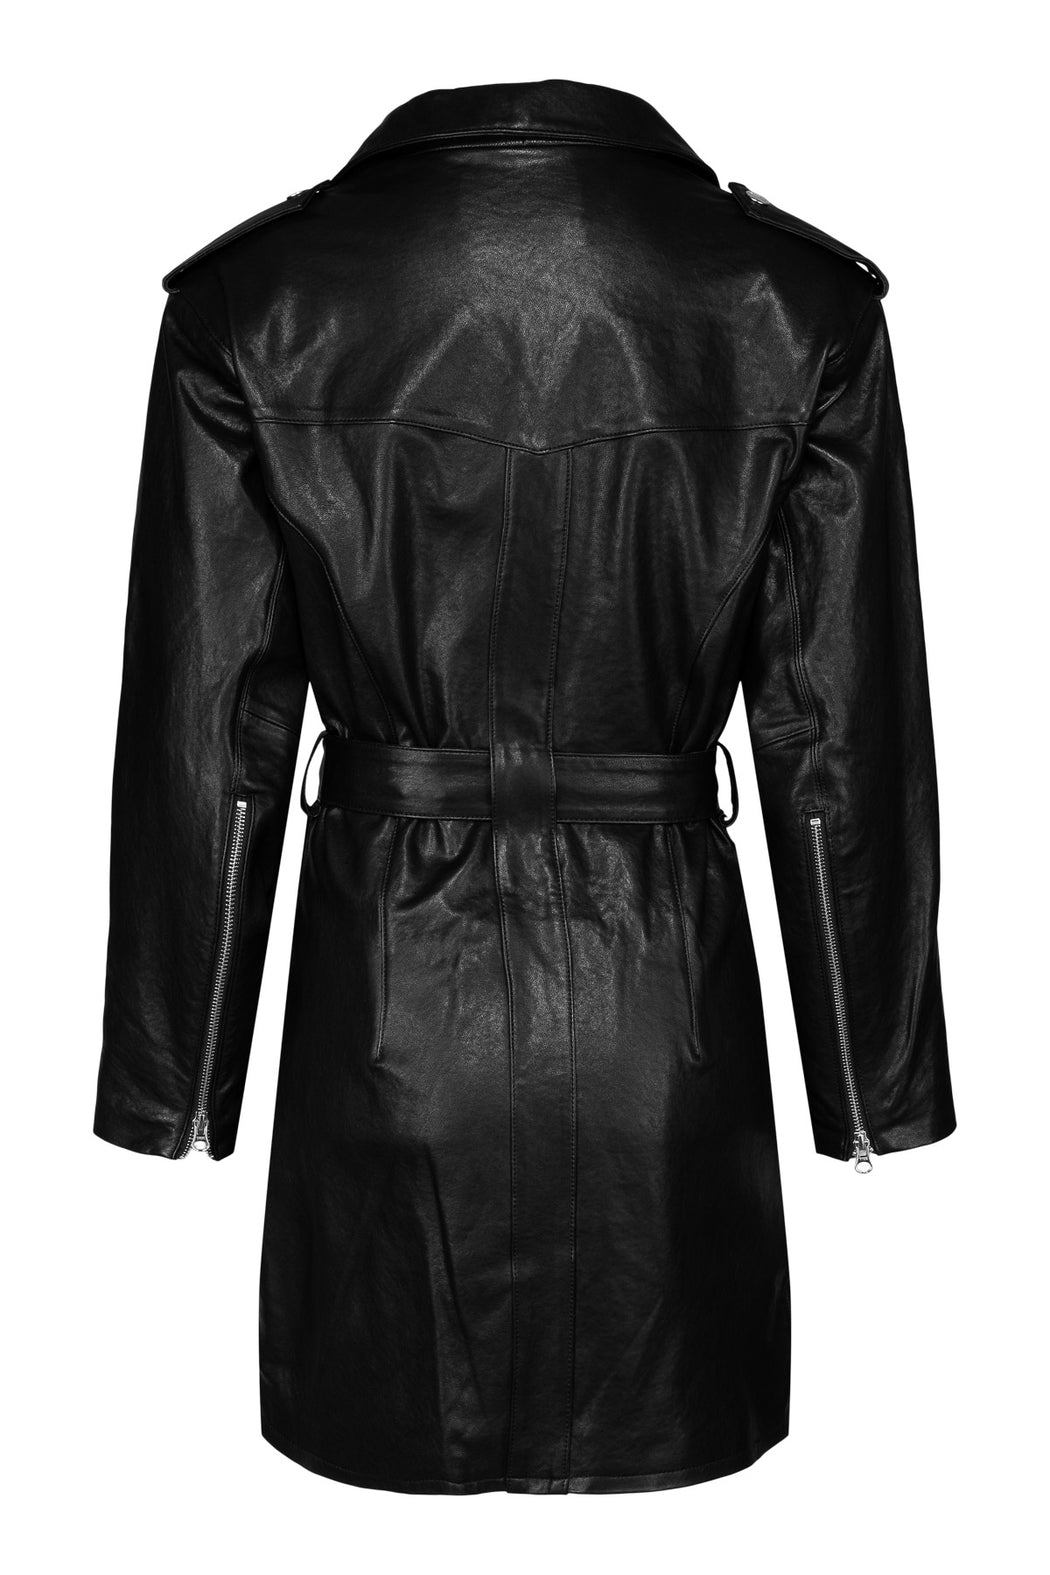 Envelope1976 Jax dress - Leather Dress Black